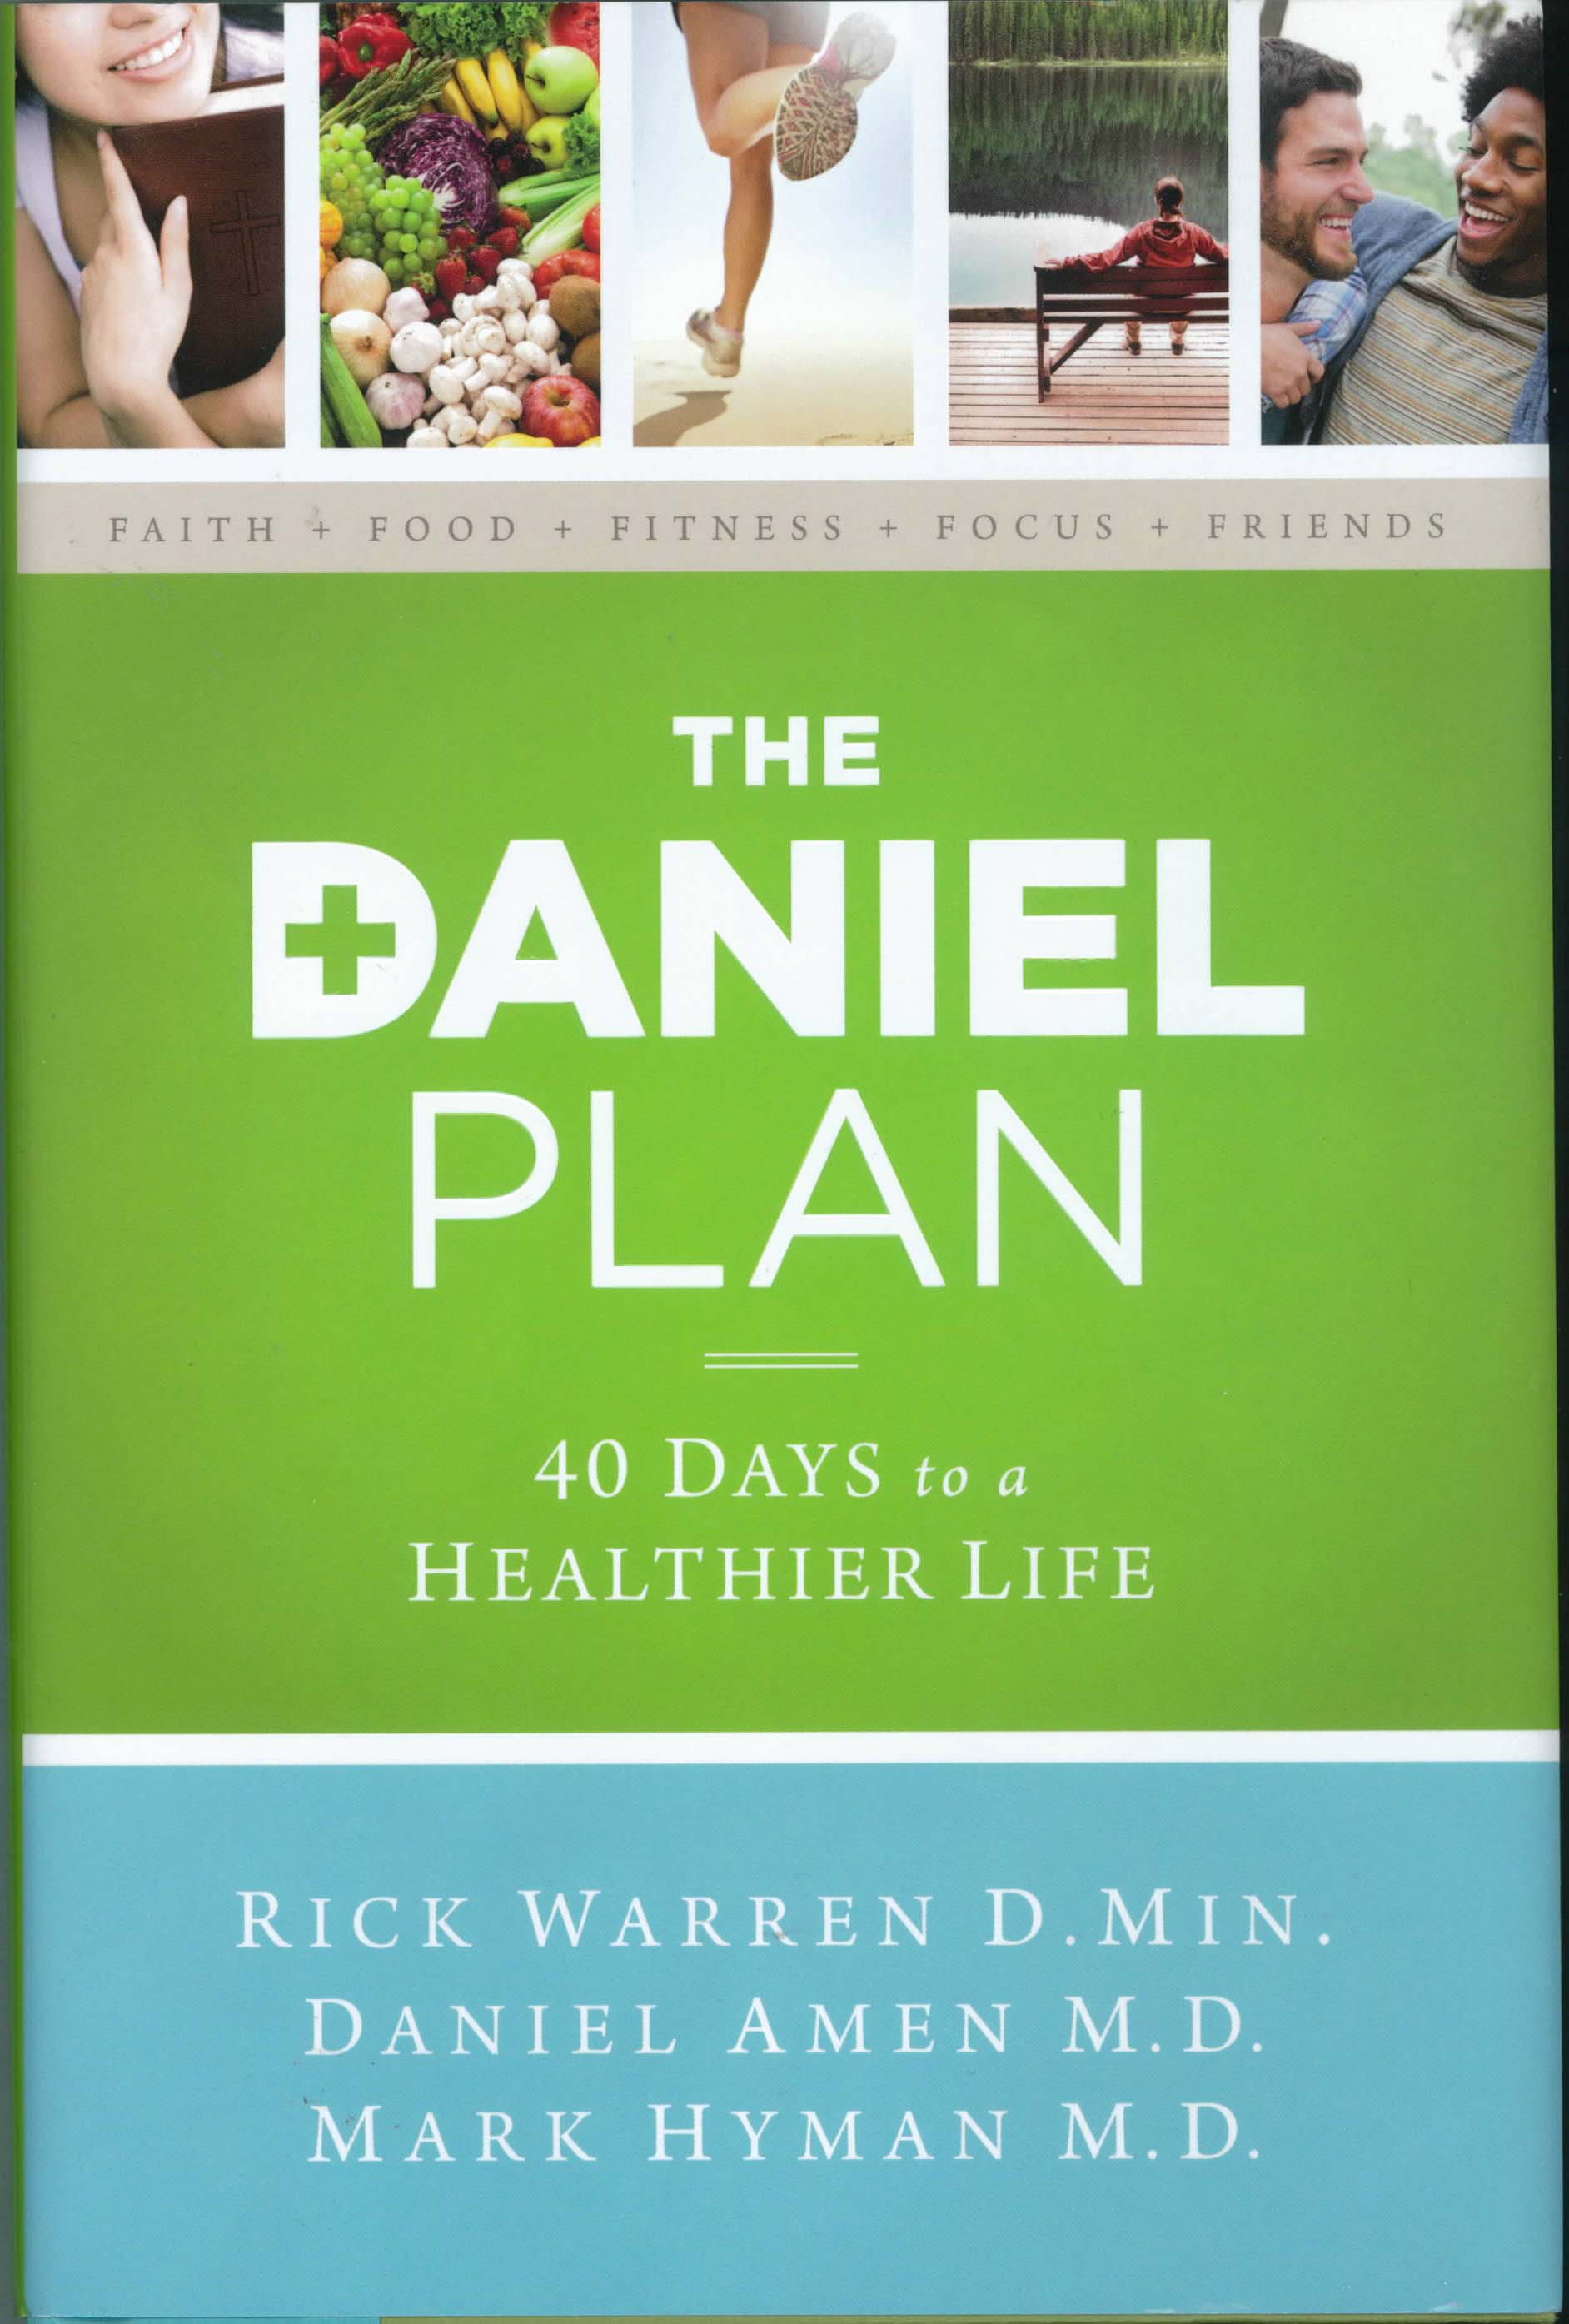 The Daniel Plan: 40 Days to a Healthier Life by Rick Warren 108-9780310344292